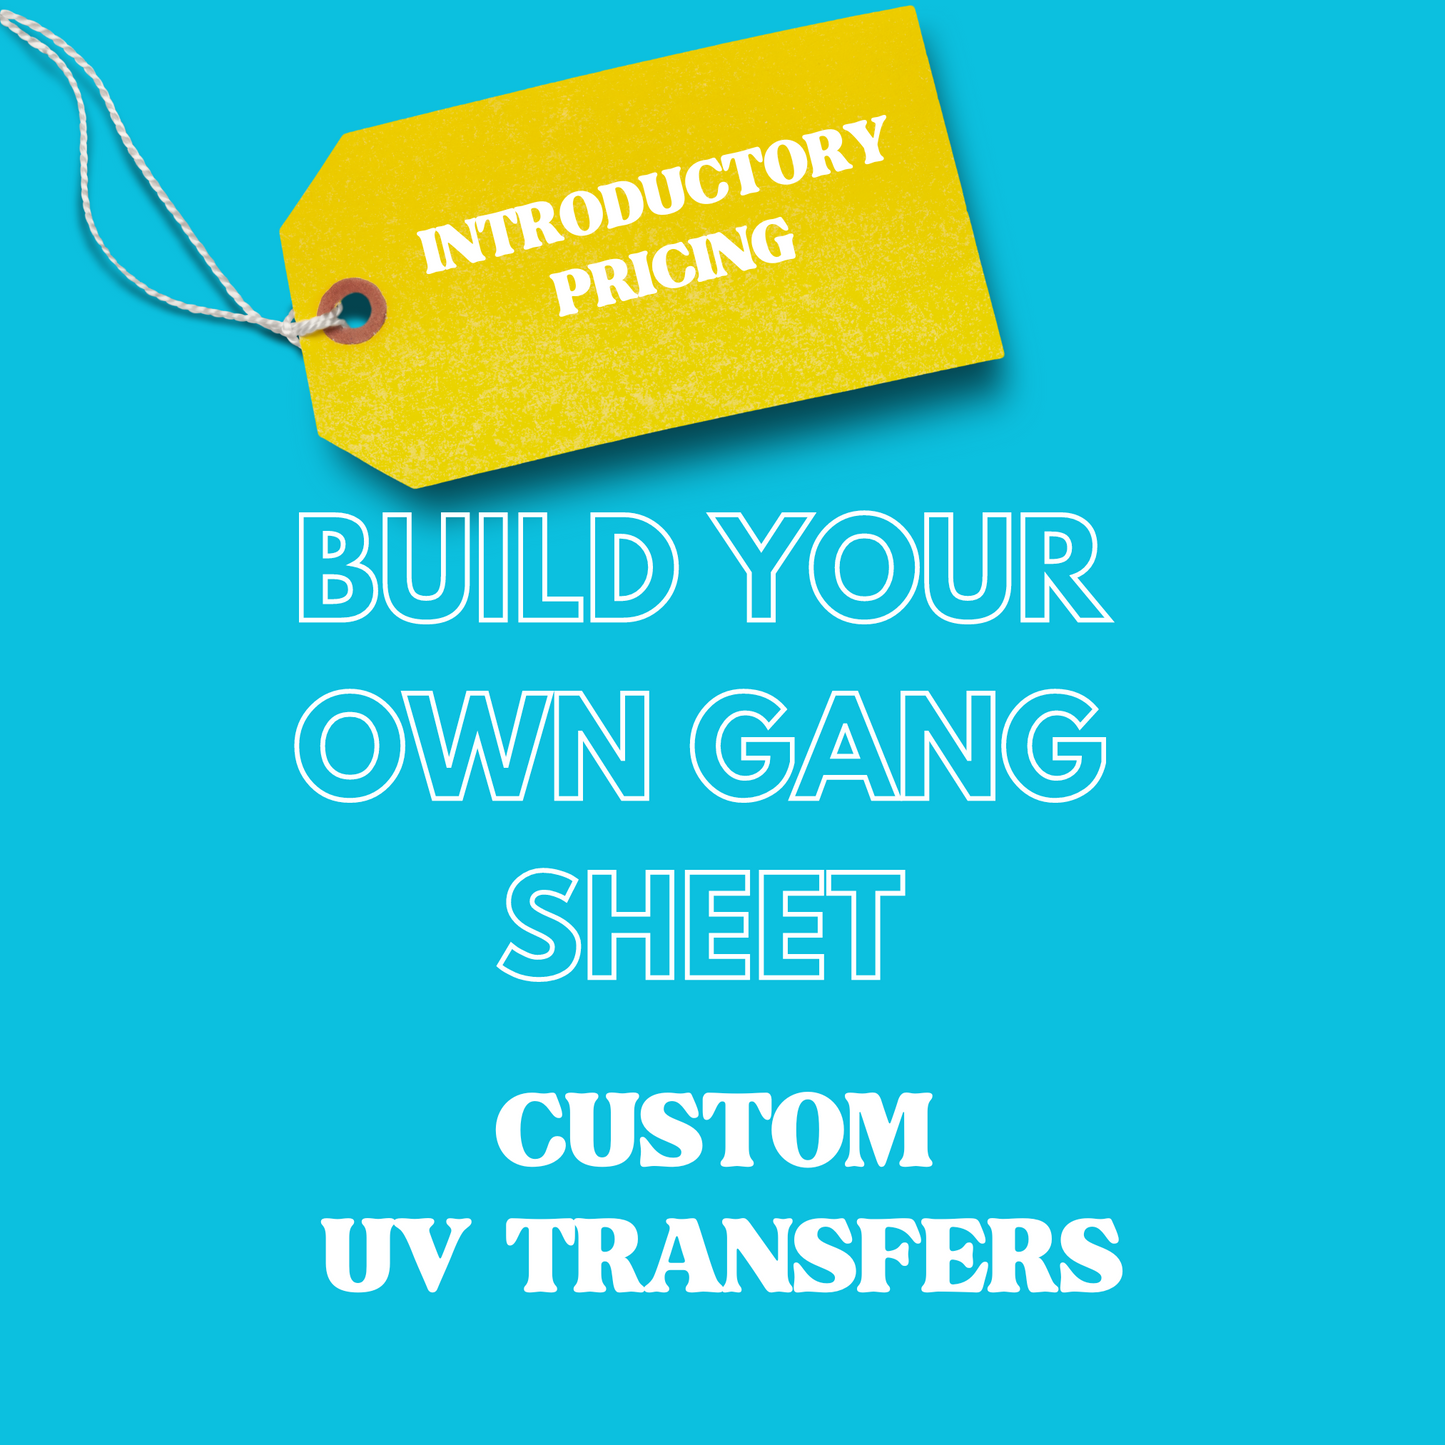 Custom UV Transfers- Build a Gang Sheet